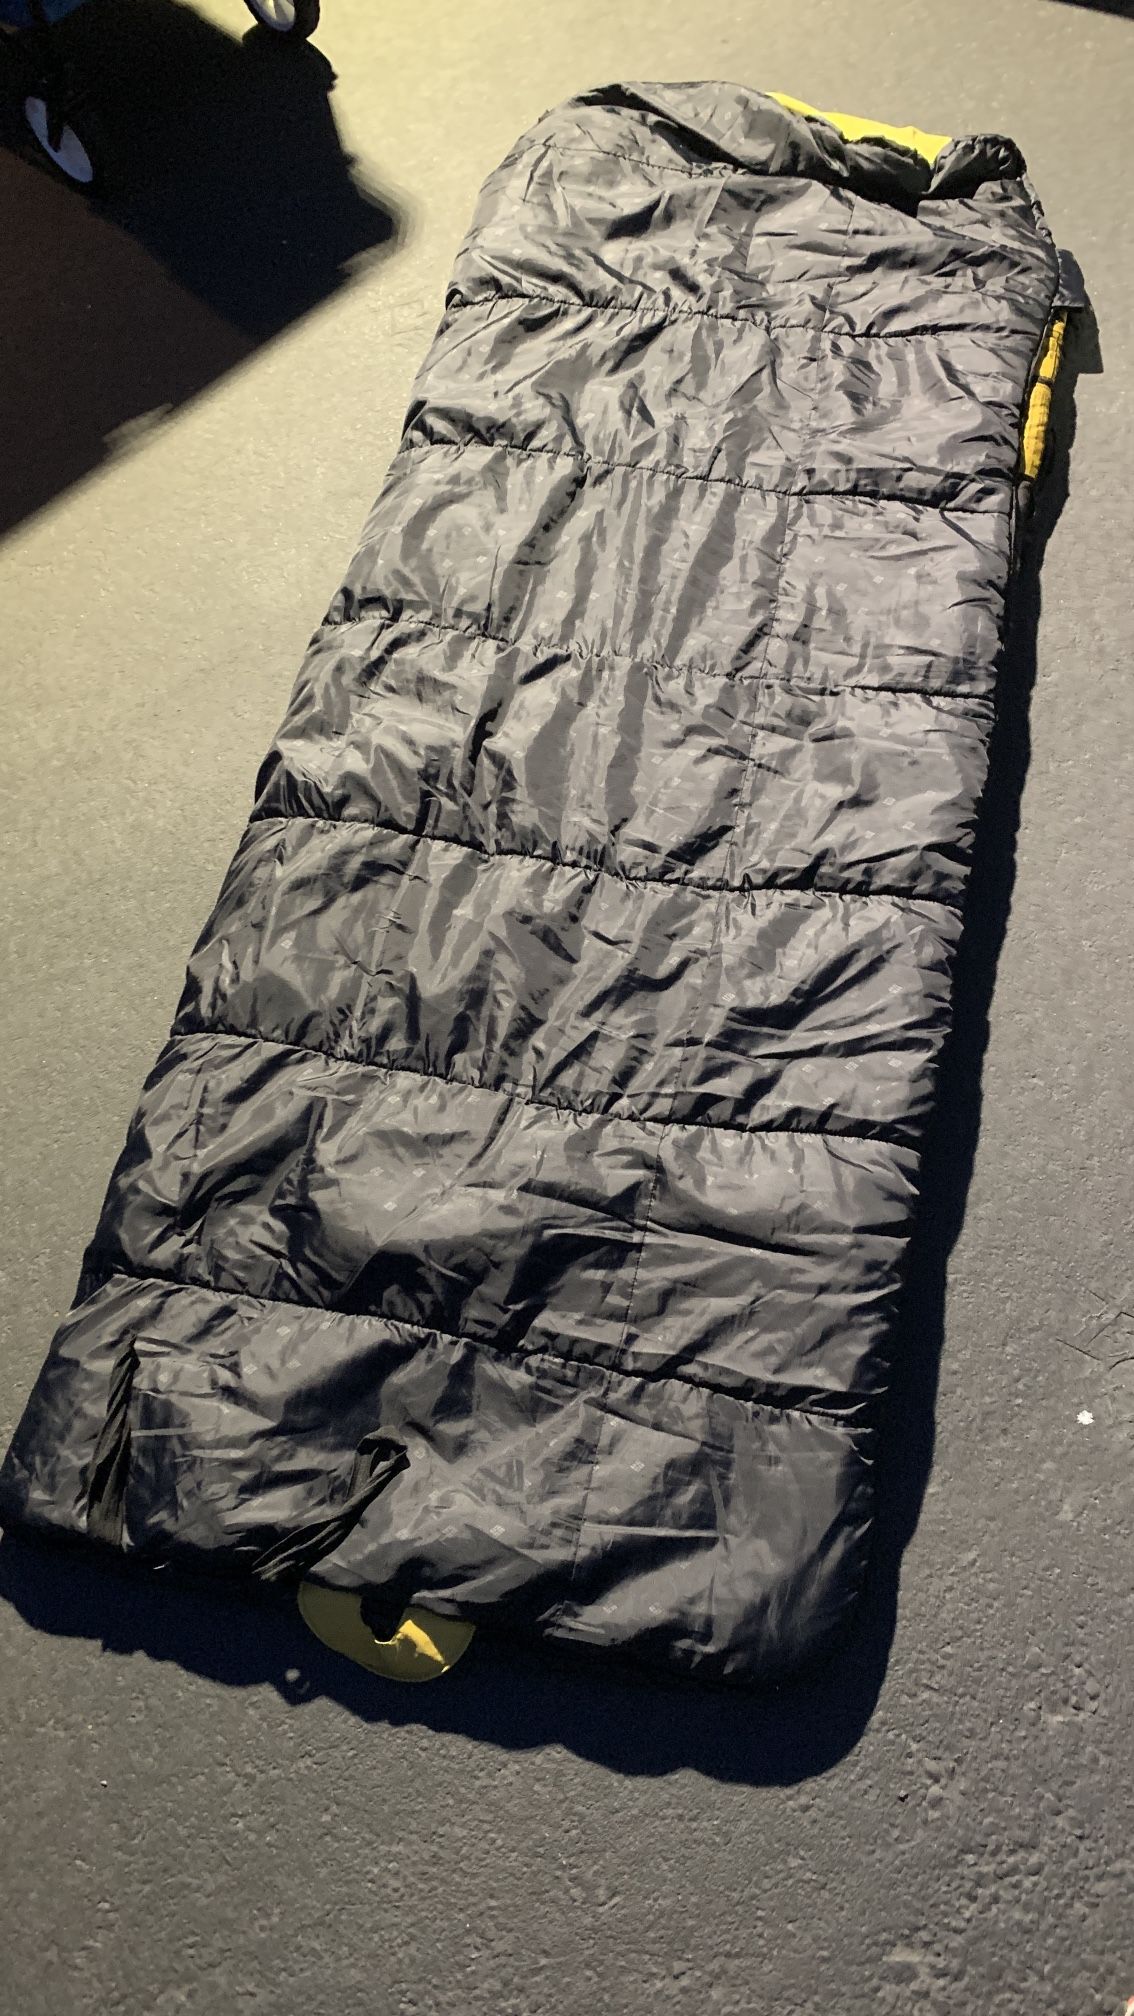 Columbia brand sleeping bag + Free Pad